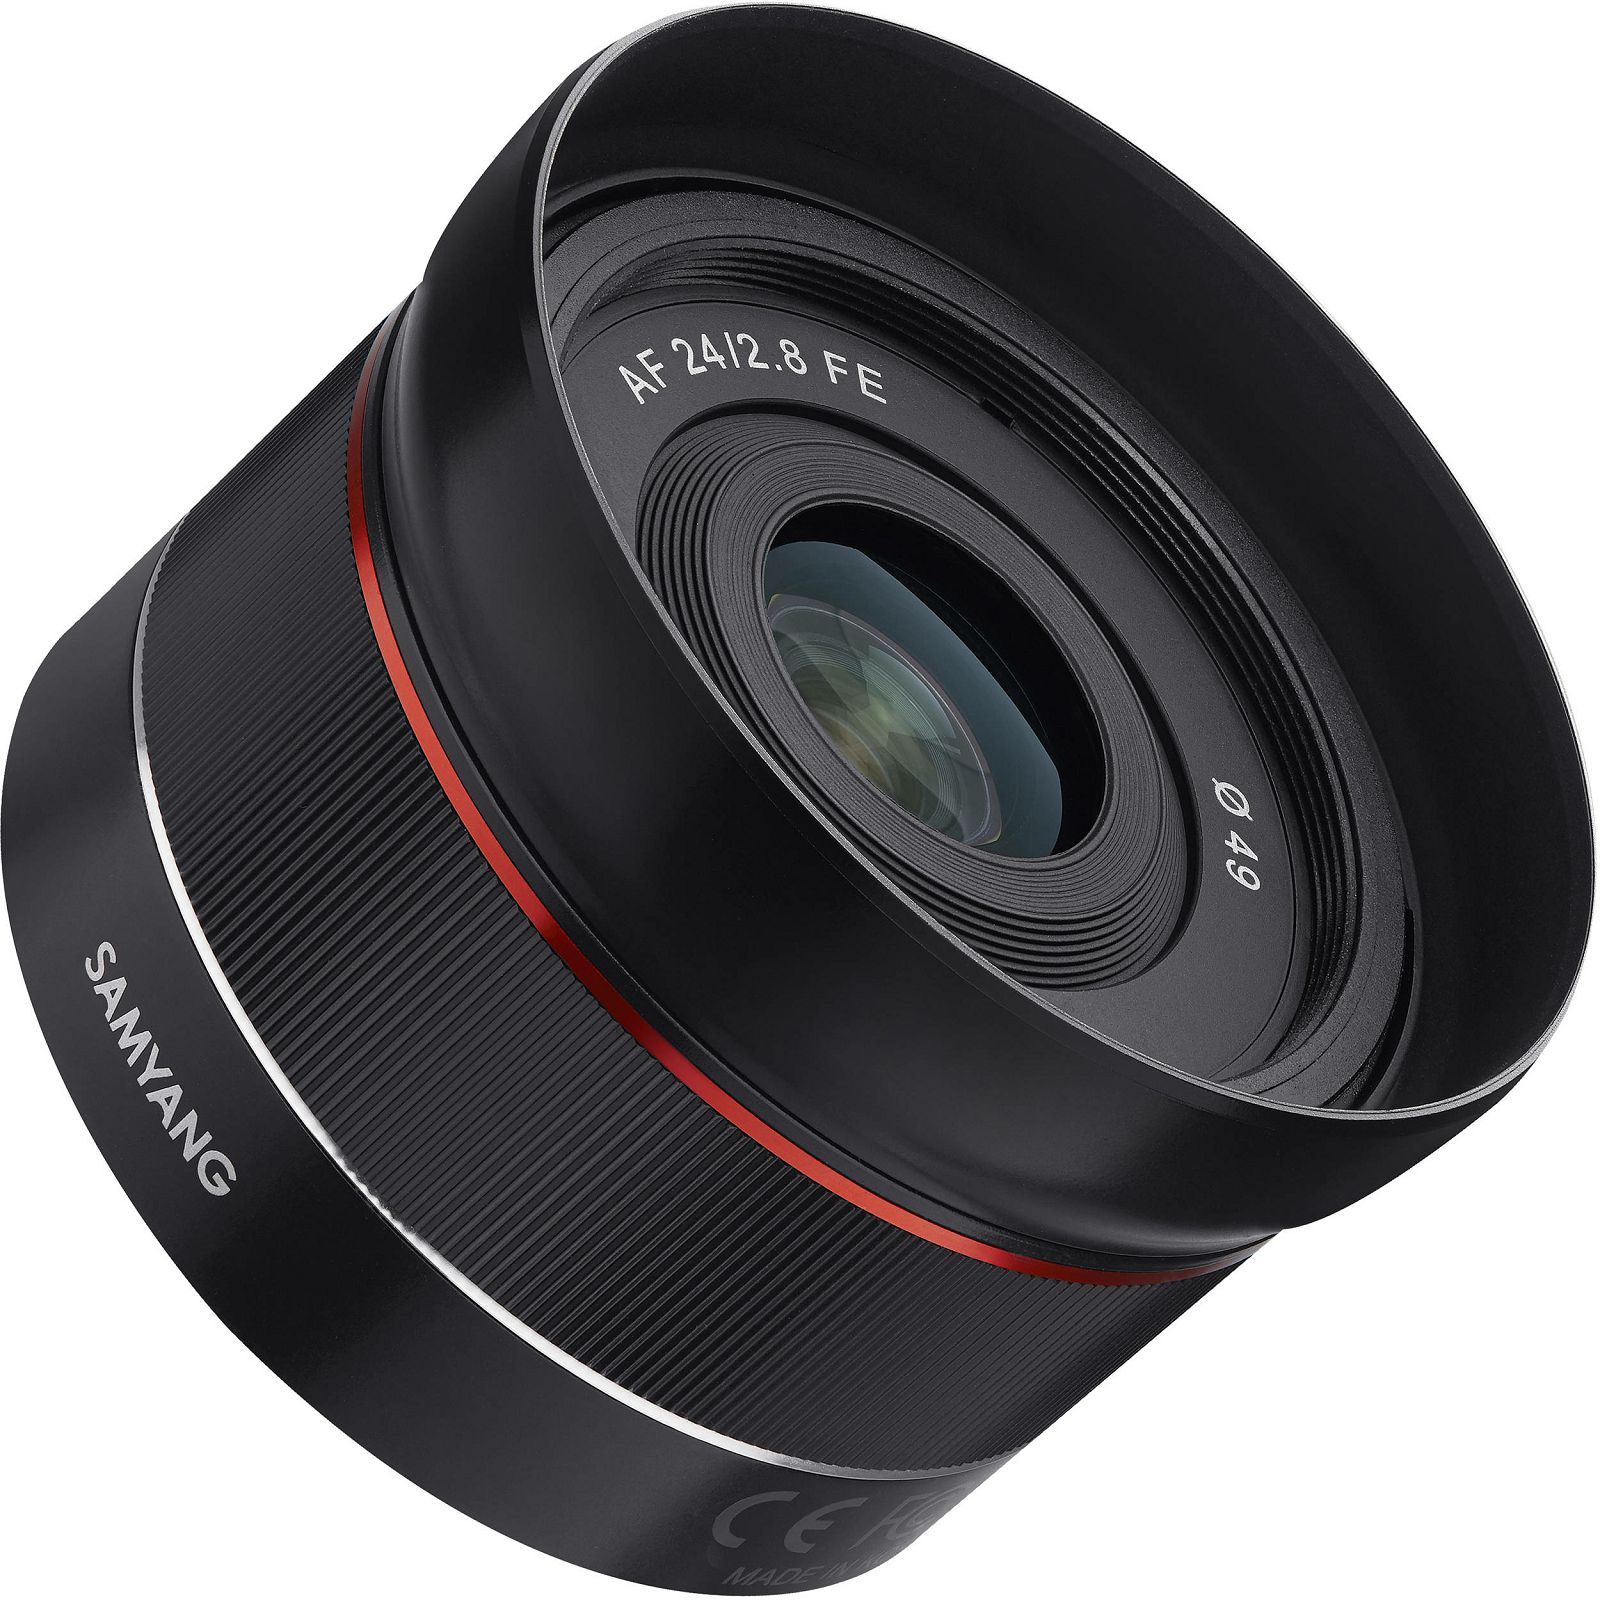 Samyang AF 24mm f/2.8 FE širokokutni objektiv za Sony E-mount